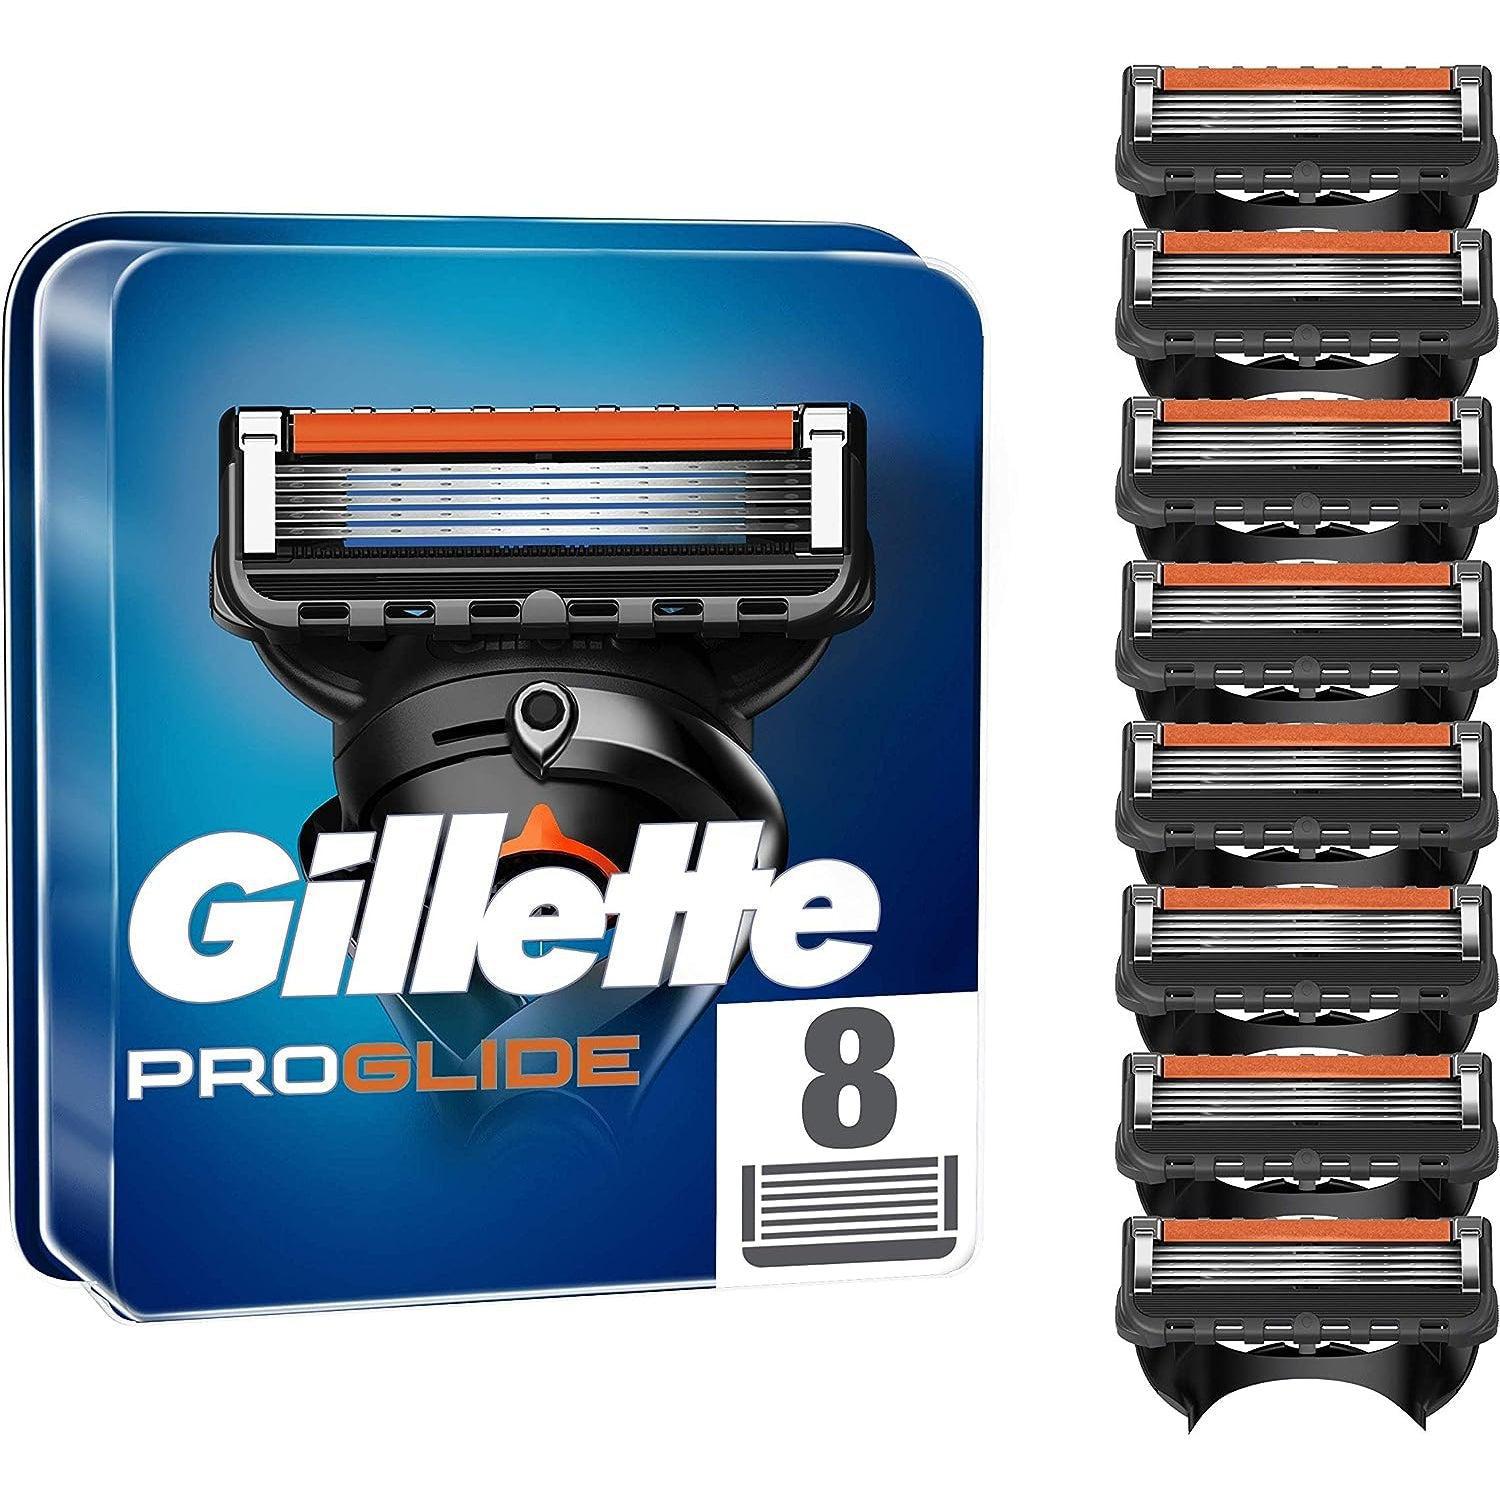 Gillette Fusion5 Men's Razor Blade Refills, 8 Count, Shaving & Depilatory